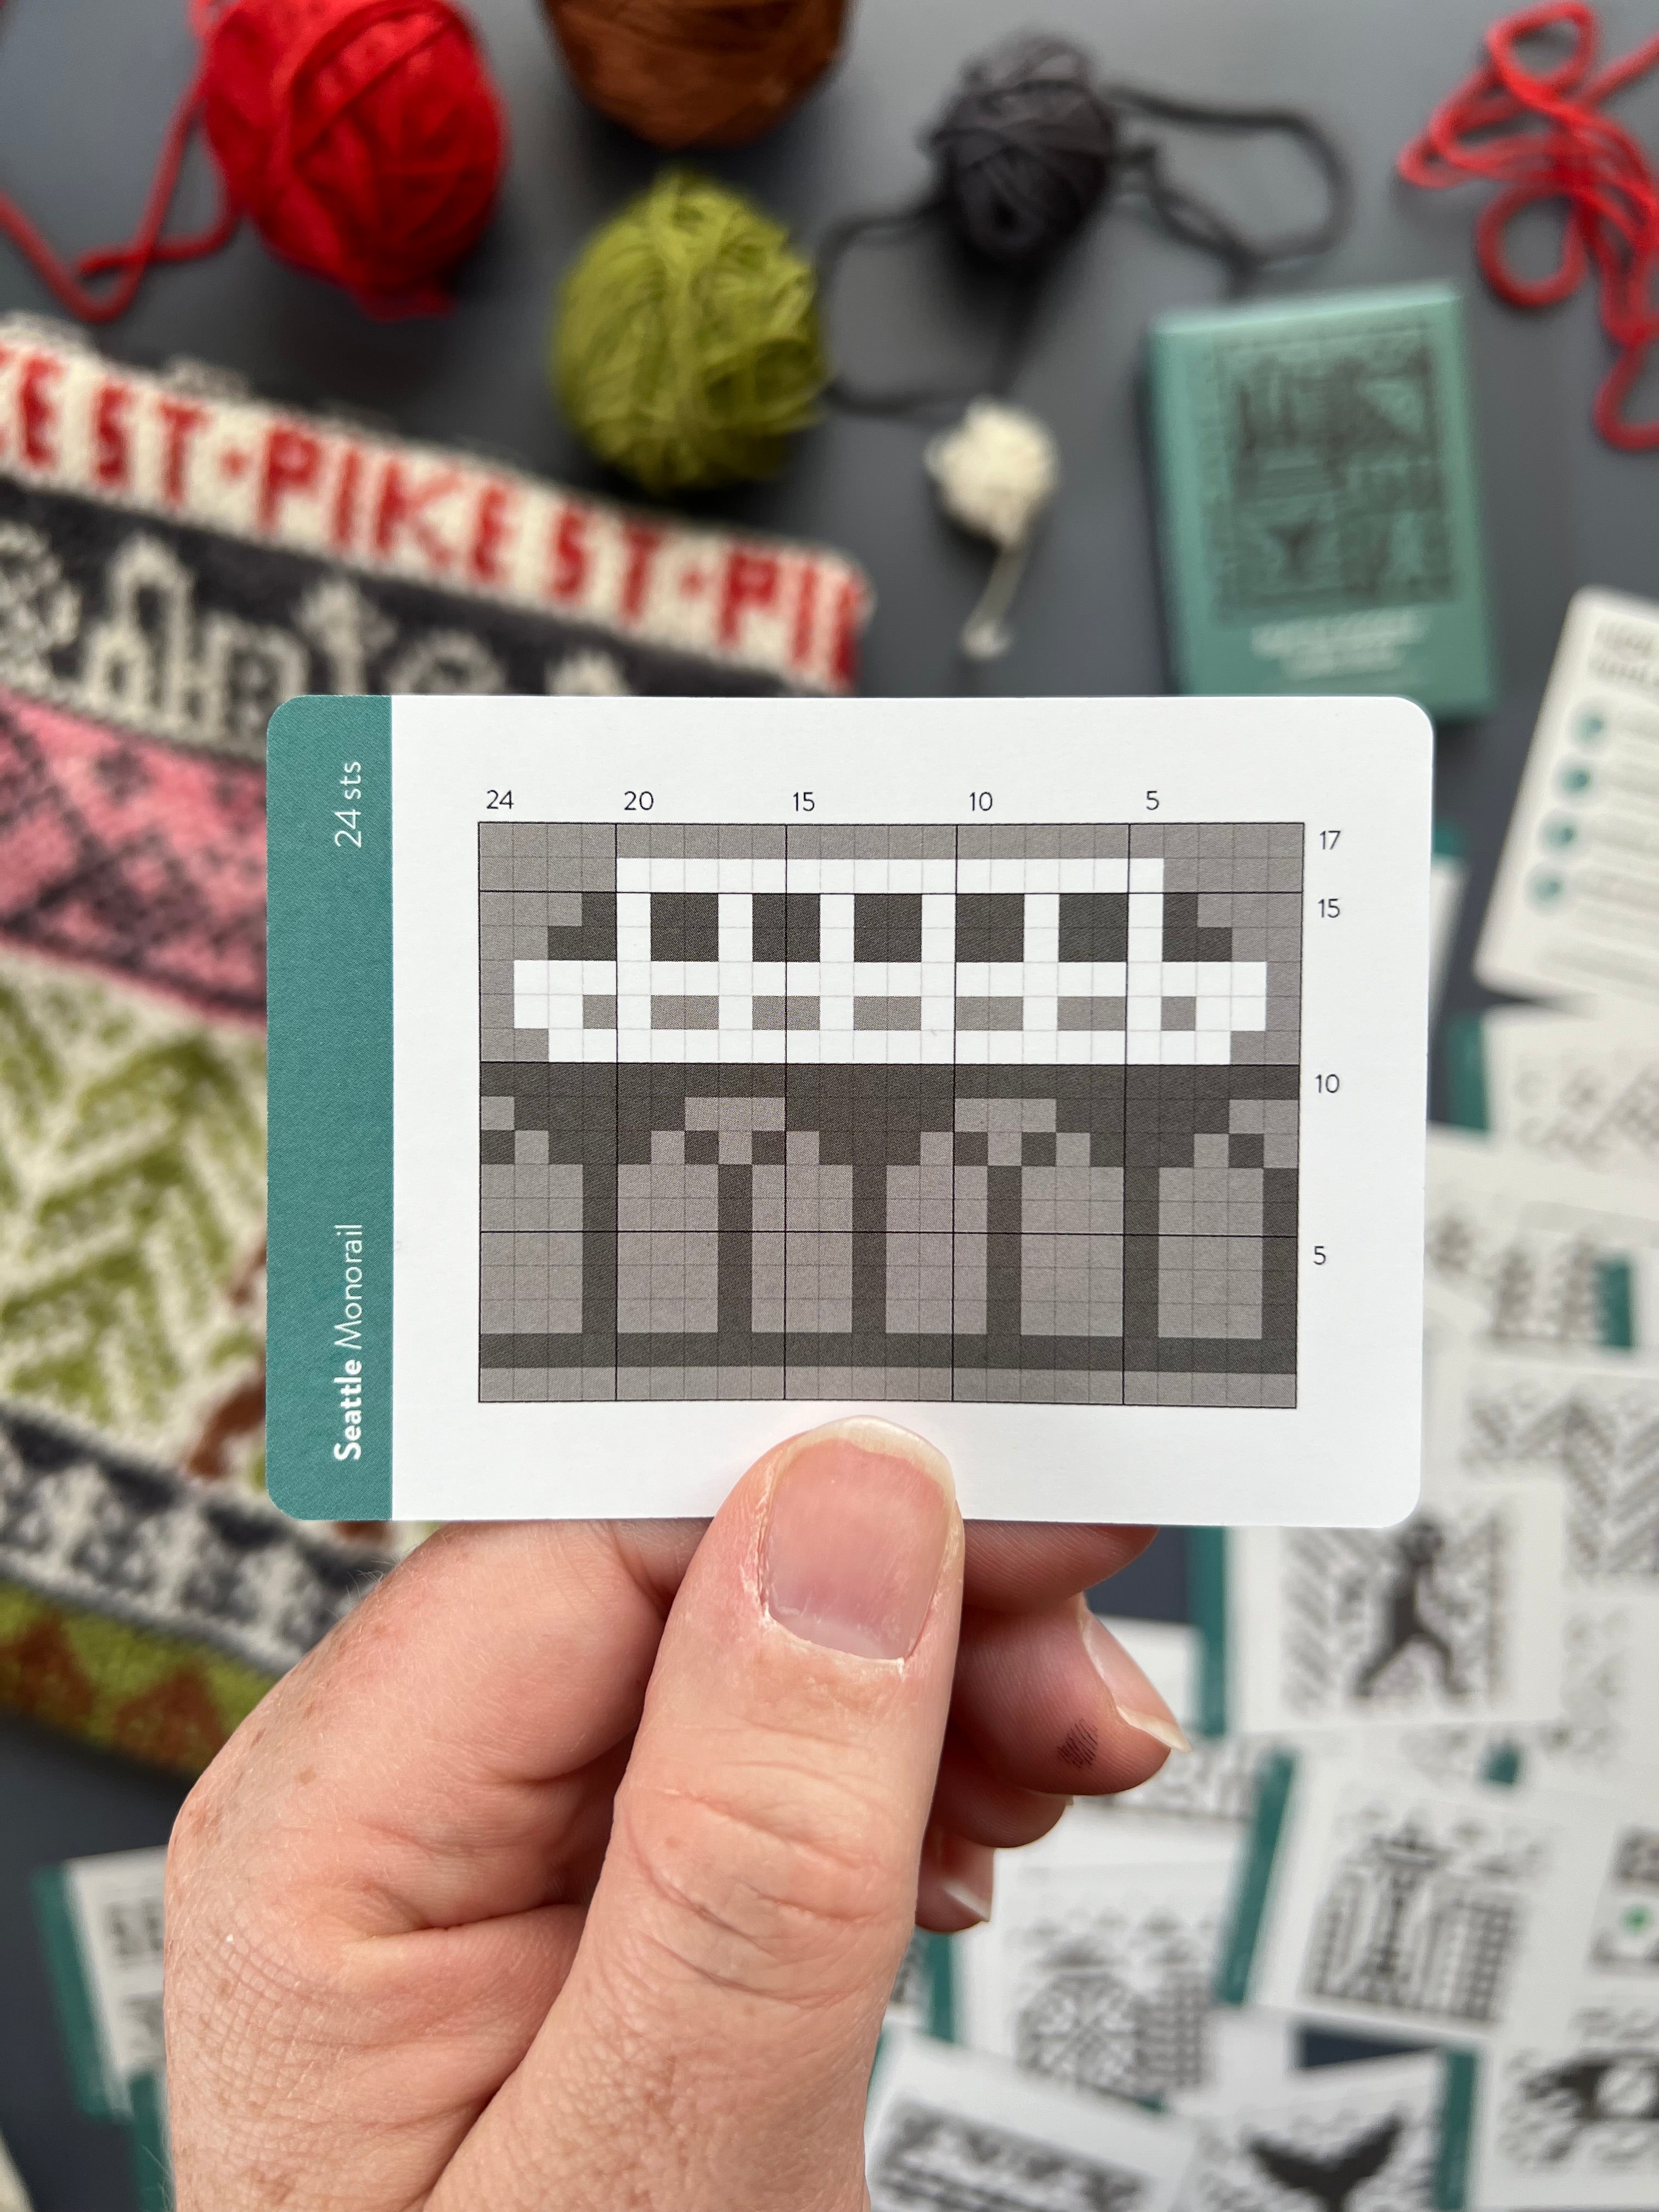 Doodle Card Deck - Seattle (half deck)